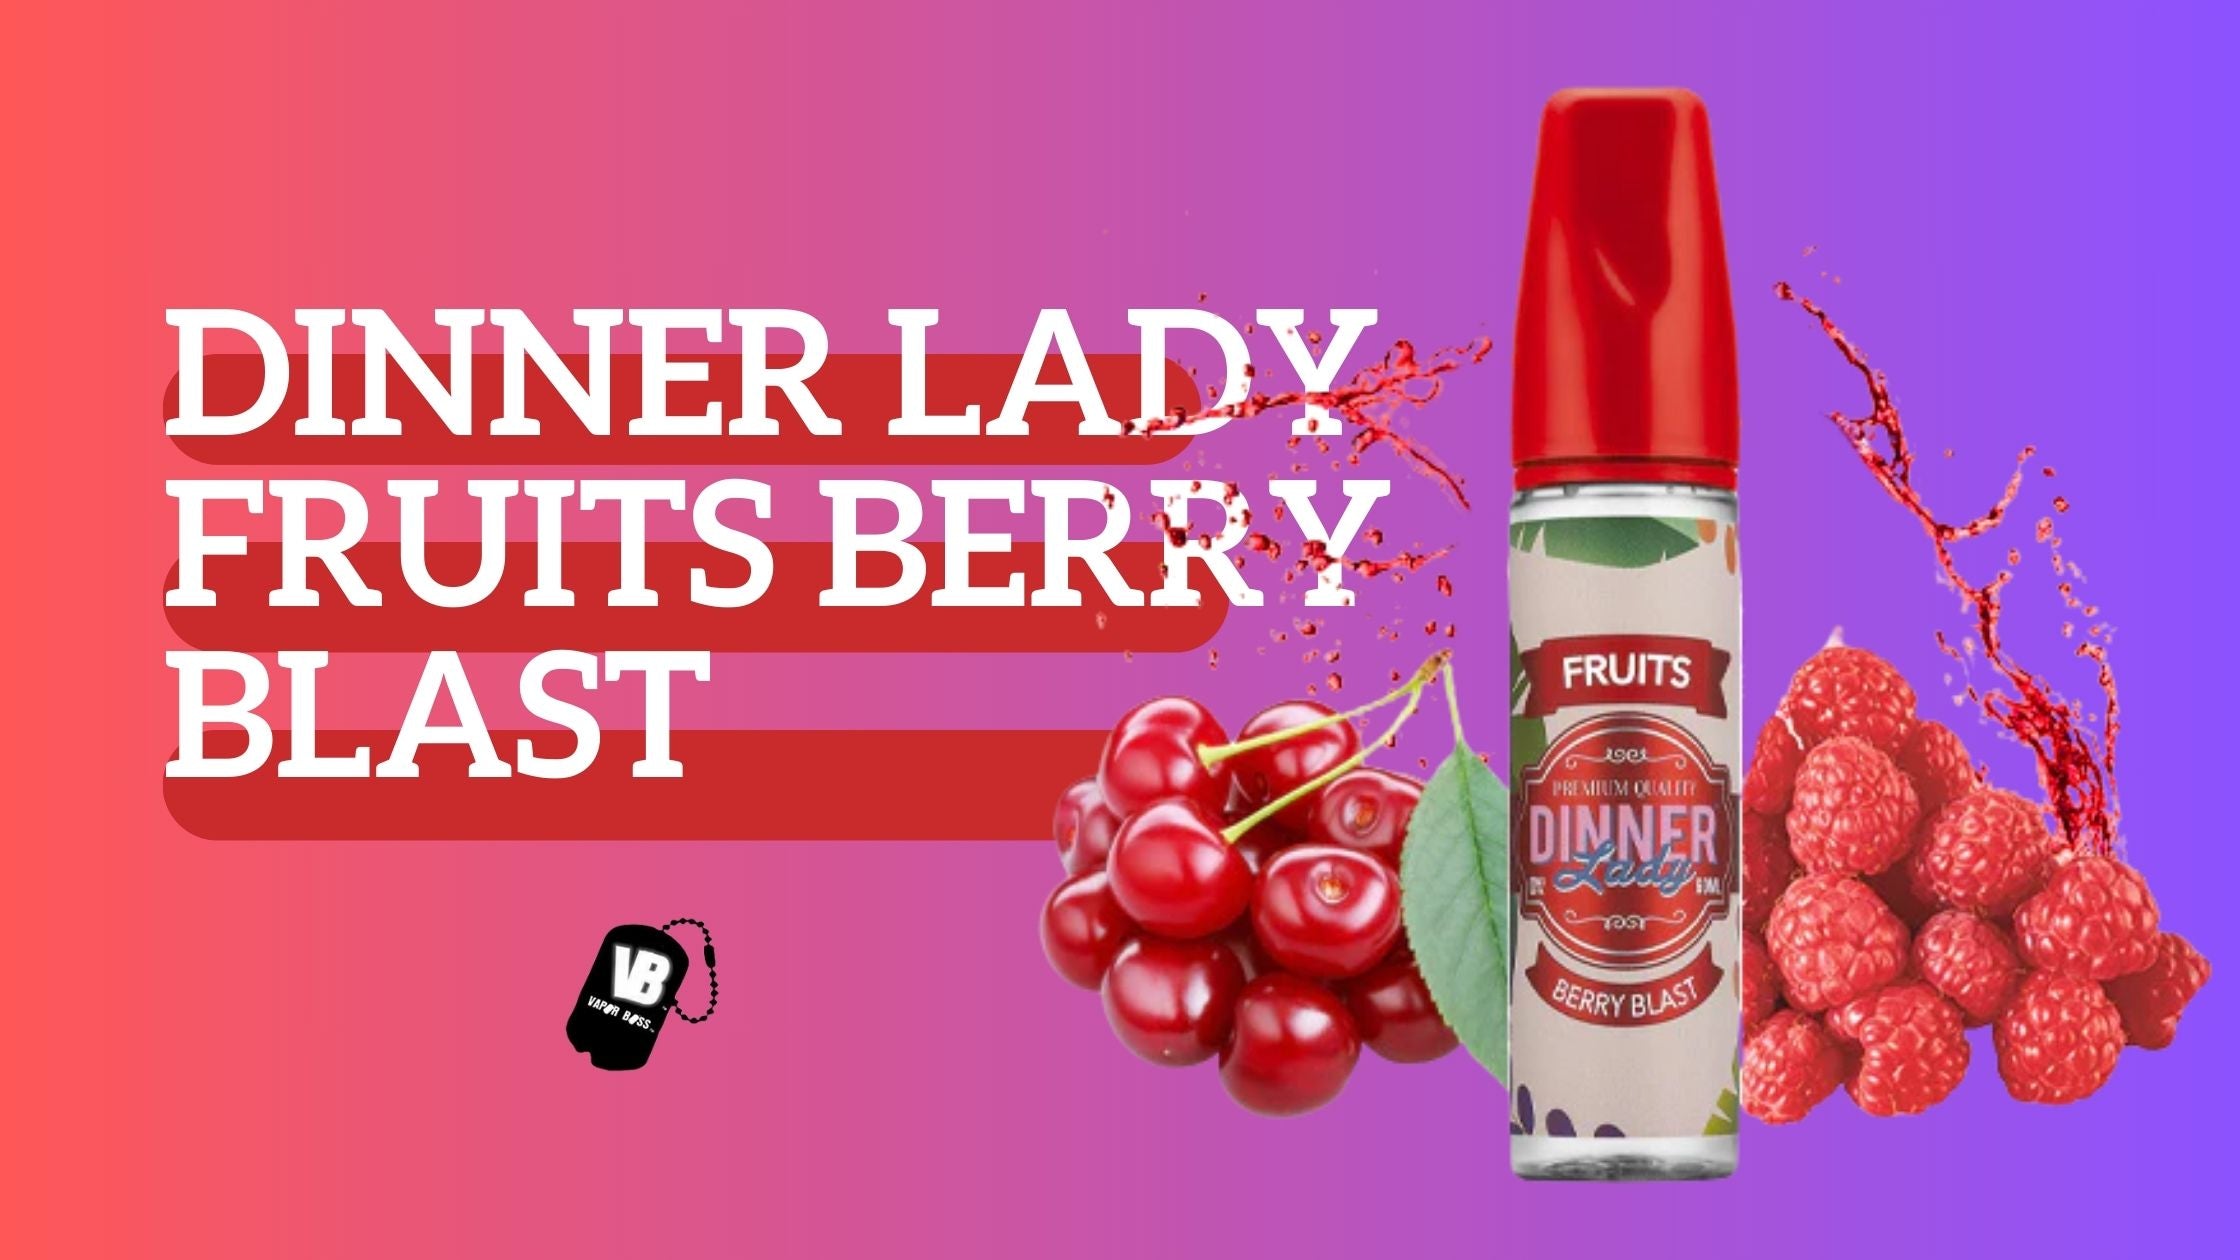 Dinner Lady Fruits Berry Blast